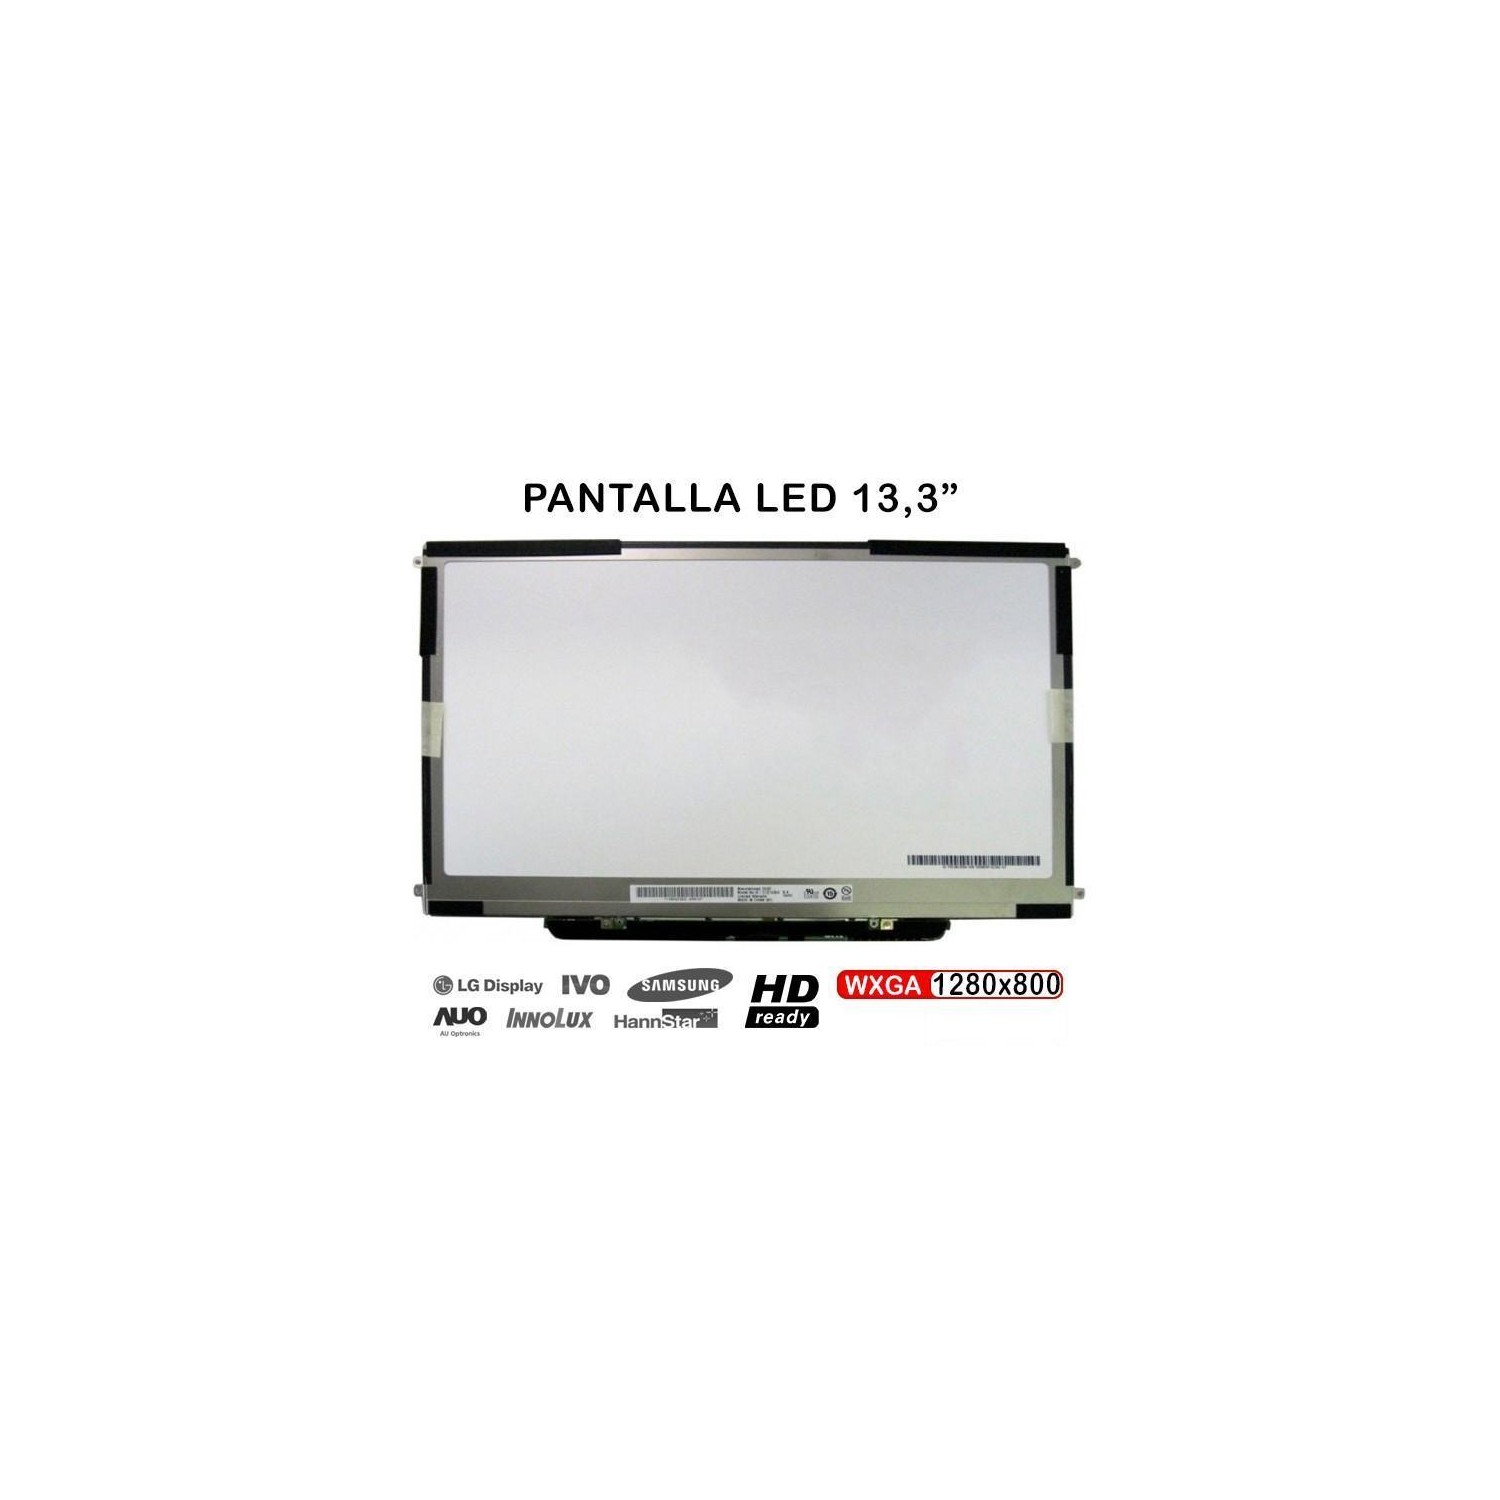 PANTALLA PARA APPLE MACBOOK A1342 13.3" 